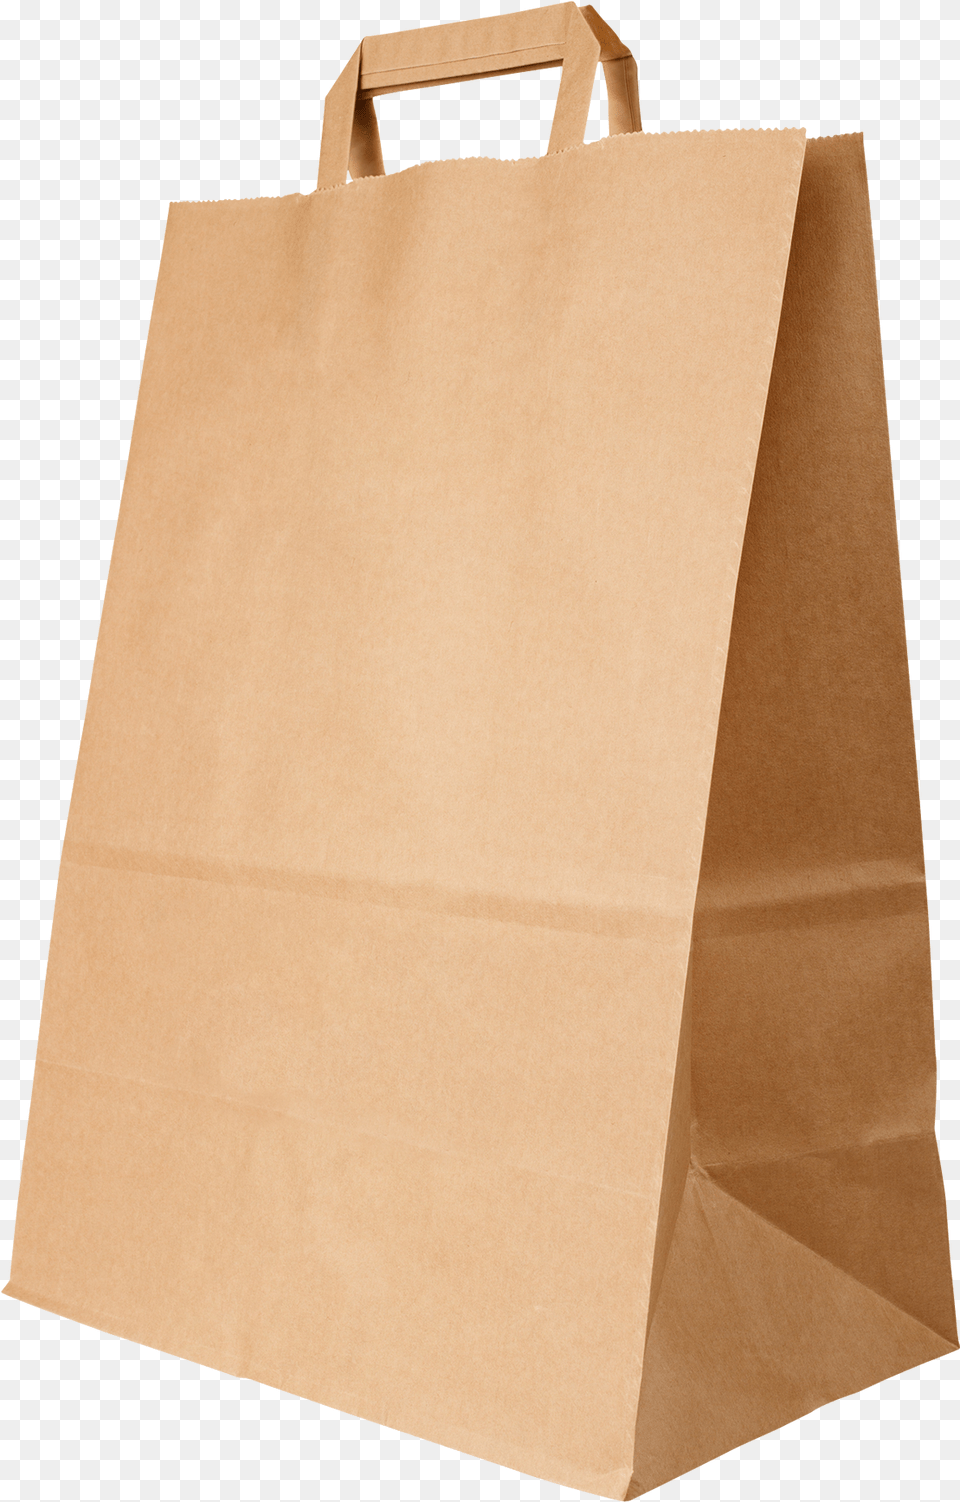 Paper Bag, Box, Shopping Bag, Cardboard, Carton Png